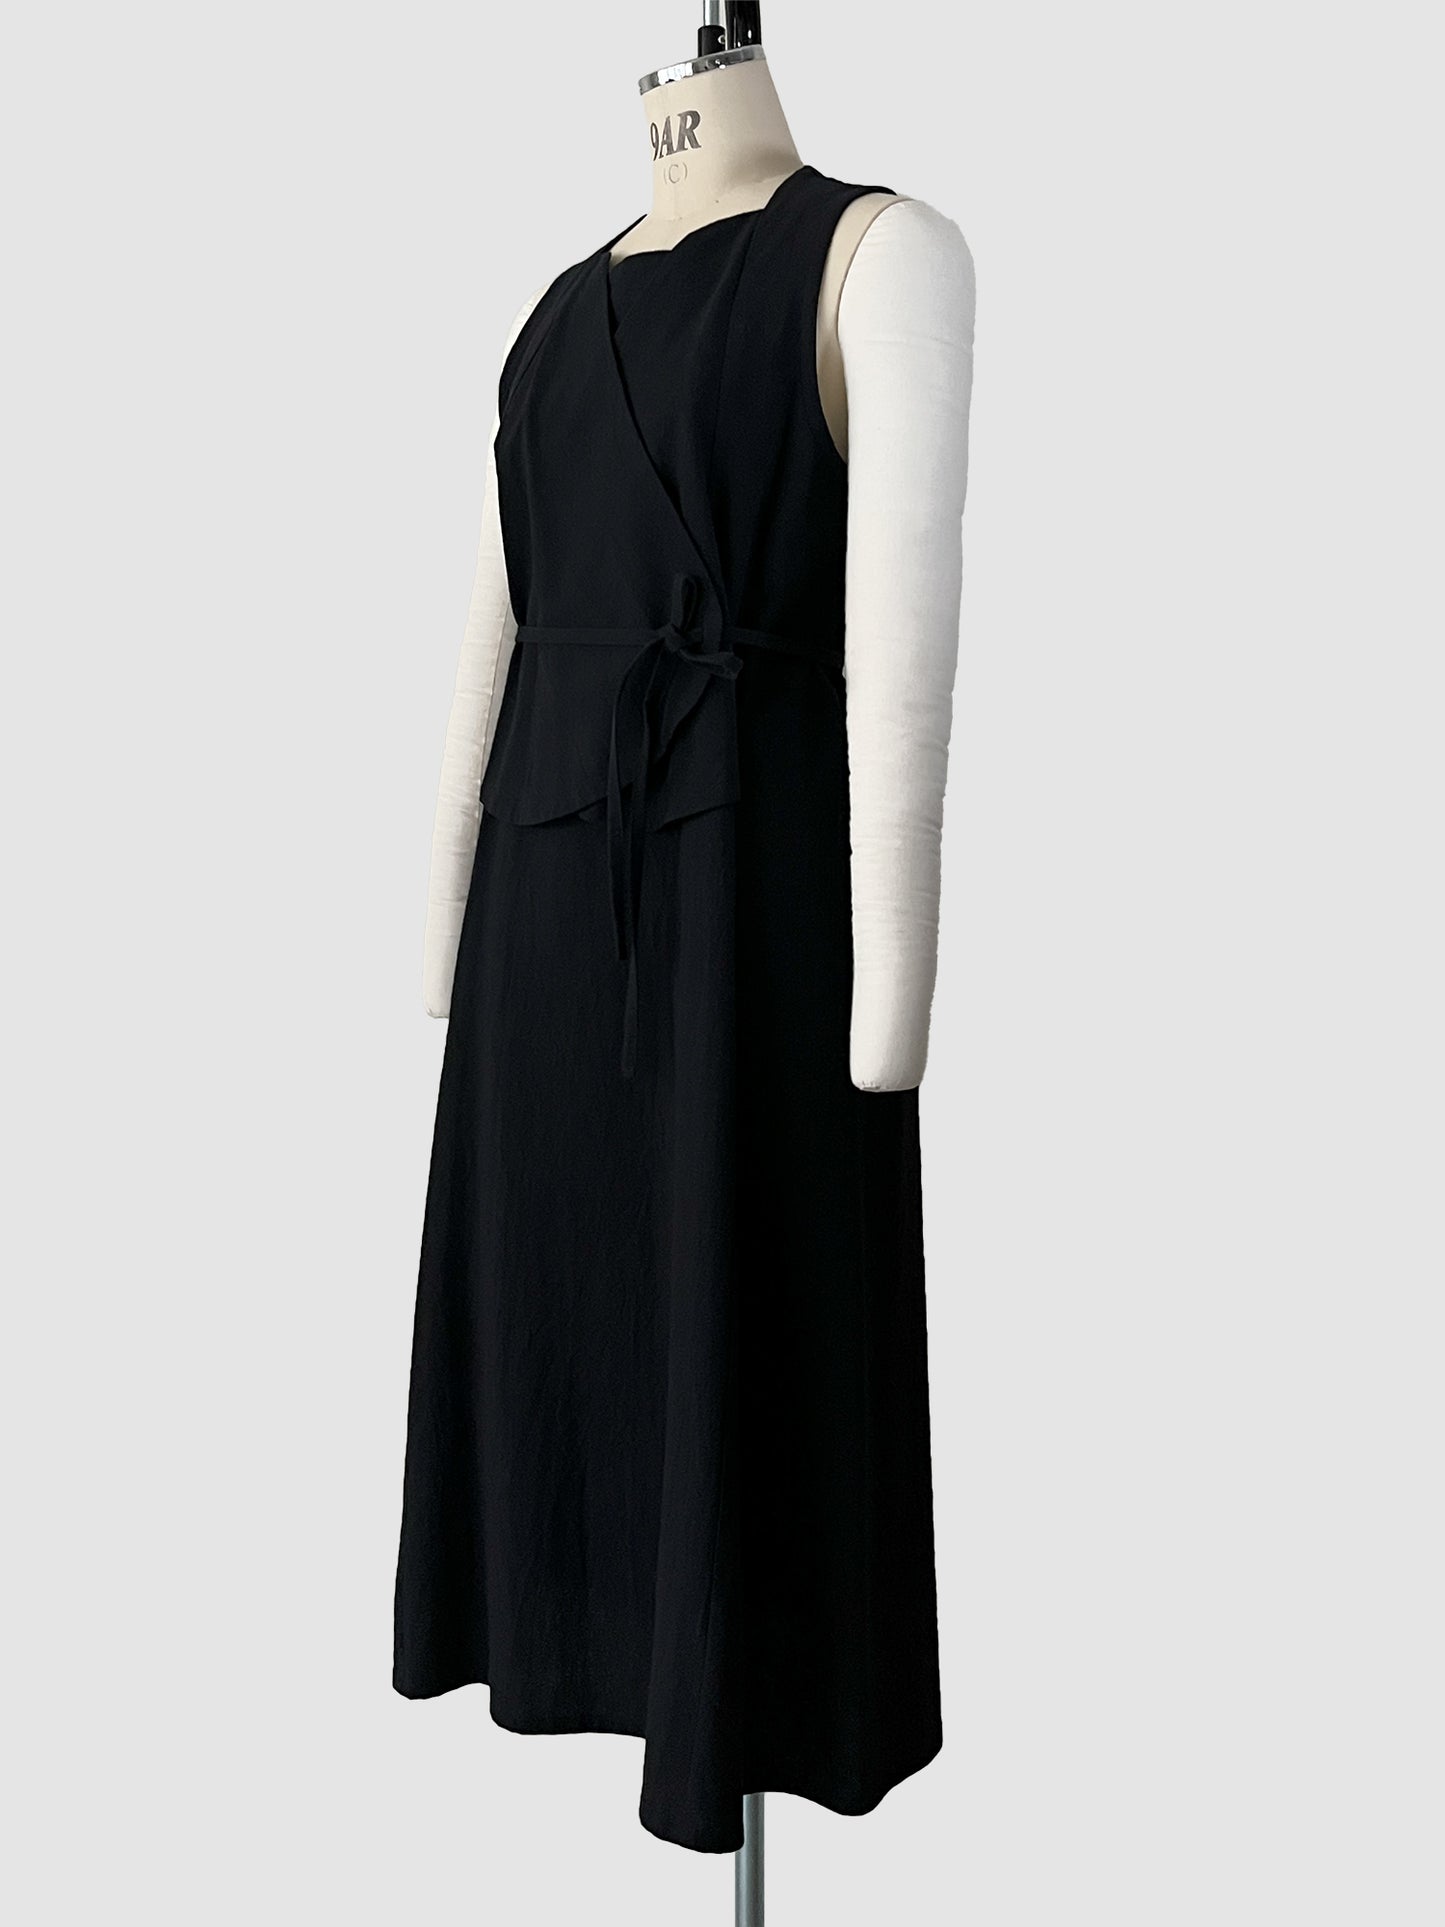 Tulip dress / Black